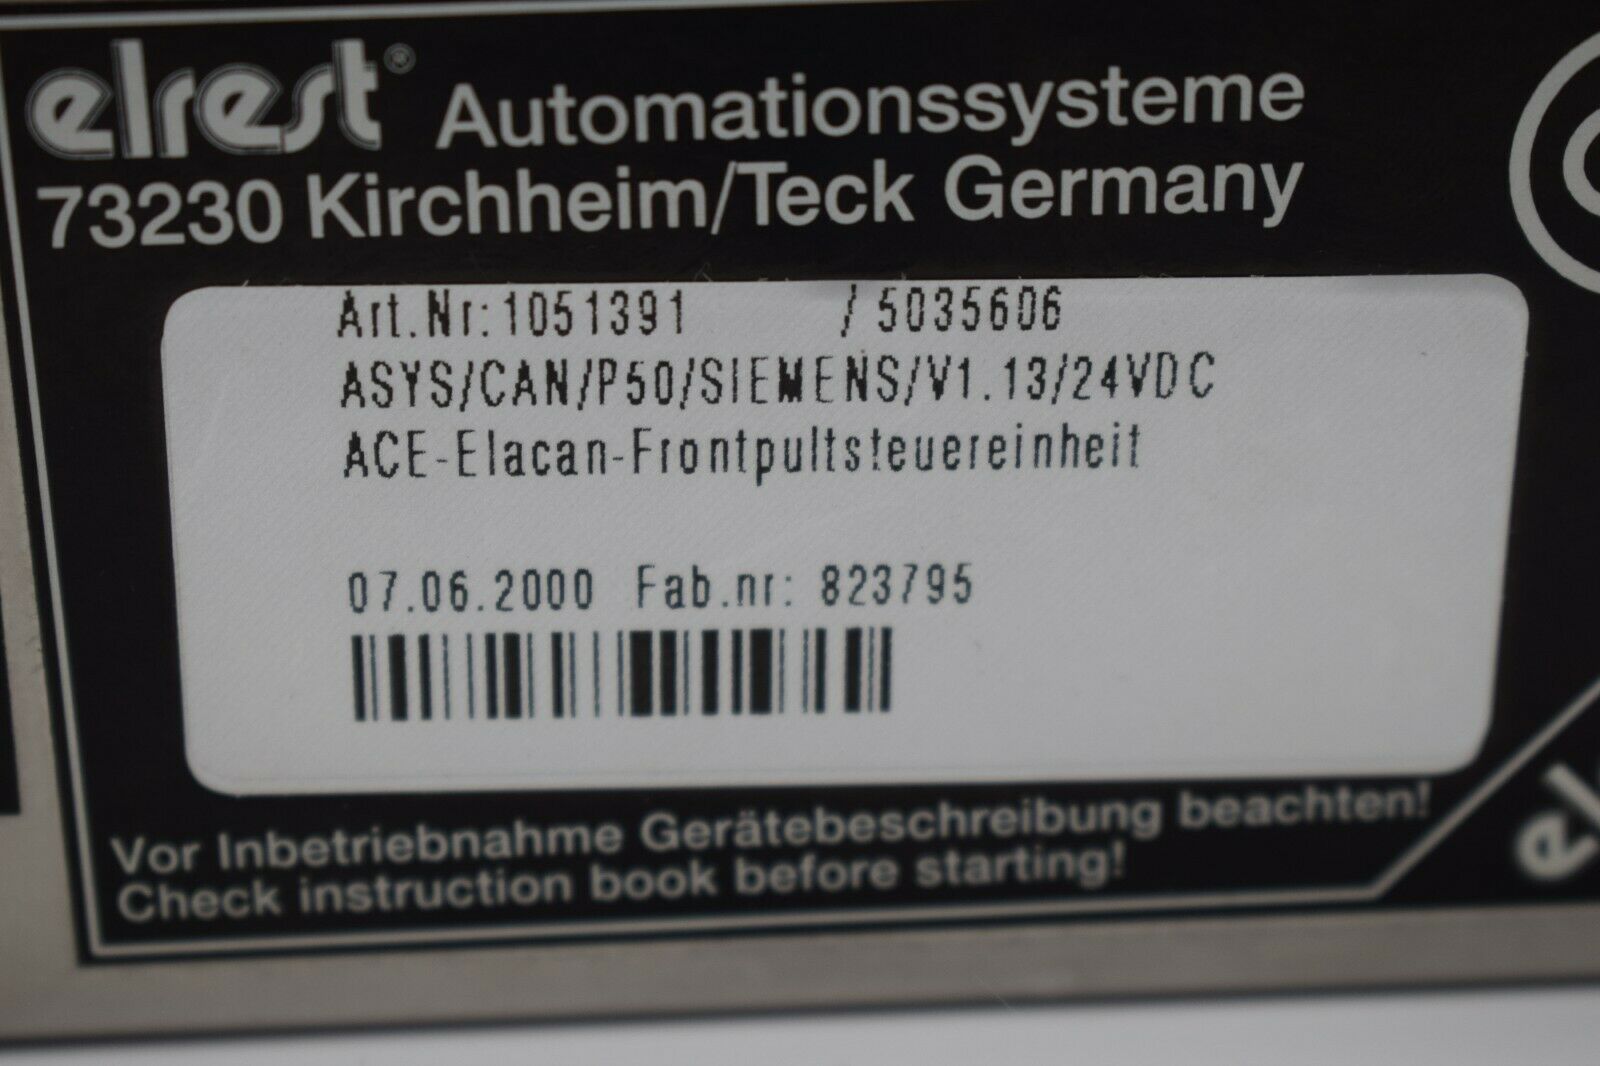 Siemens elrest ACE-Elacan-Frontpultsteuereinheit CAN/P50/Siemens/V1.13/24DVC